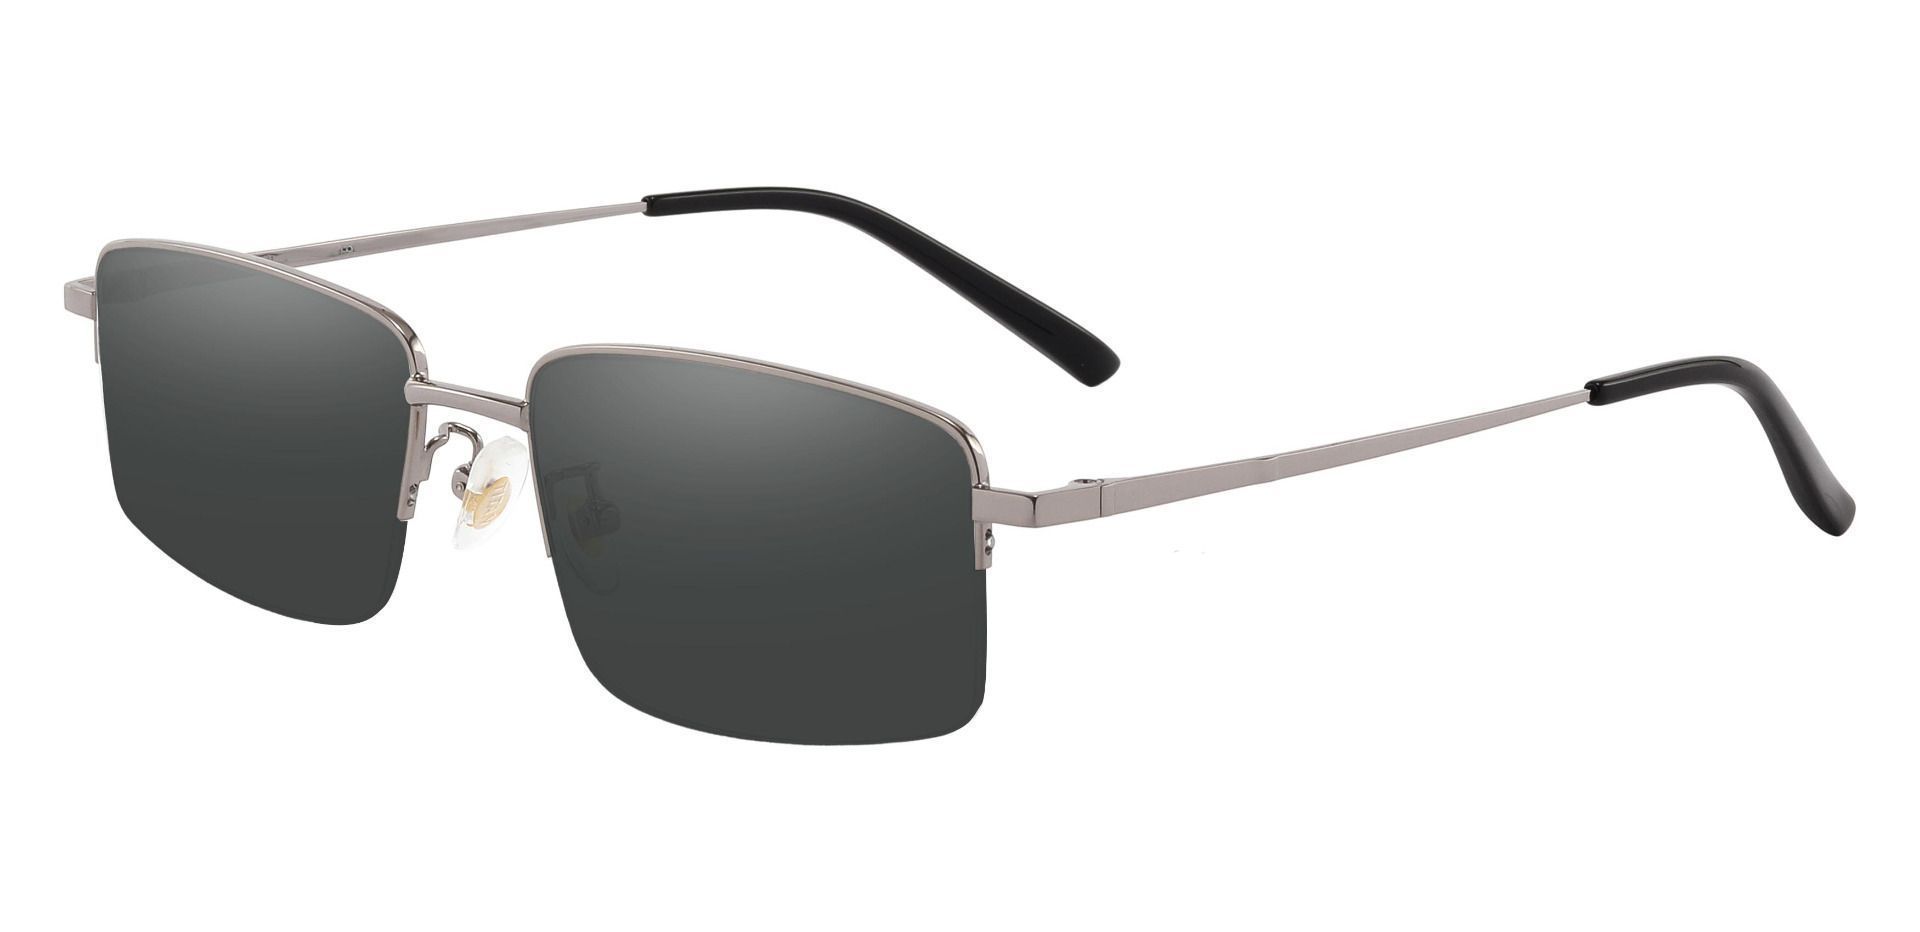 Wayne Rectangle Progressive Sunglasses - Gray Frame With Gray Lenses